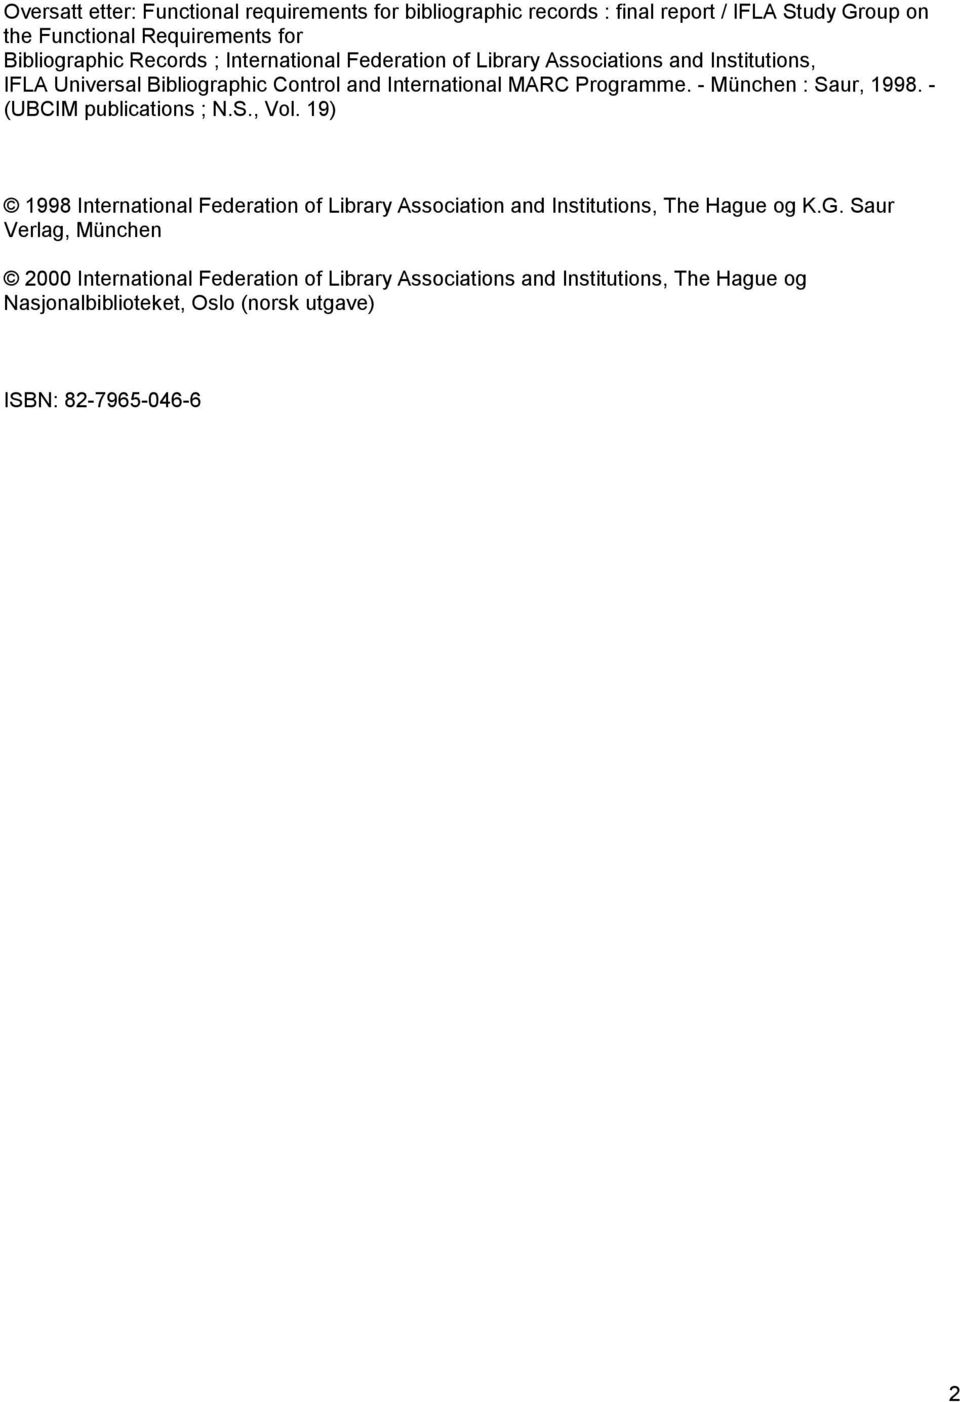 - München : Saur, 1998. - (UBCIM publications ; N.S., Vol. 19) 1998 International Federation of Library Association and Institutions, The Hague og K.G.